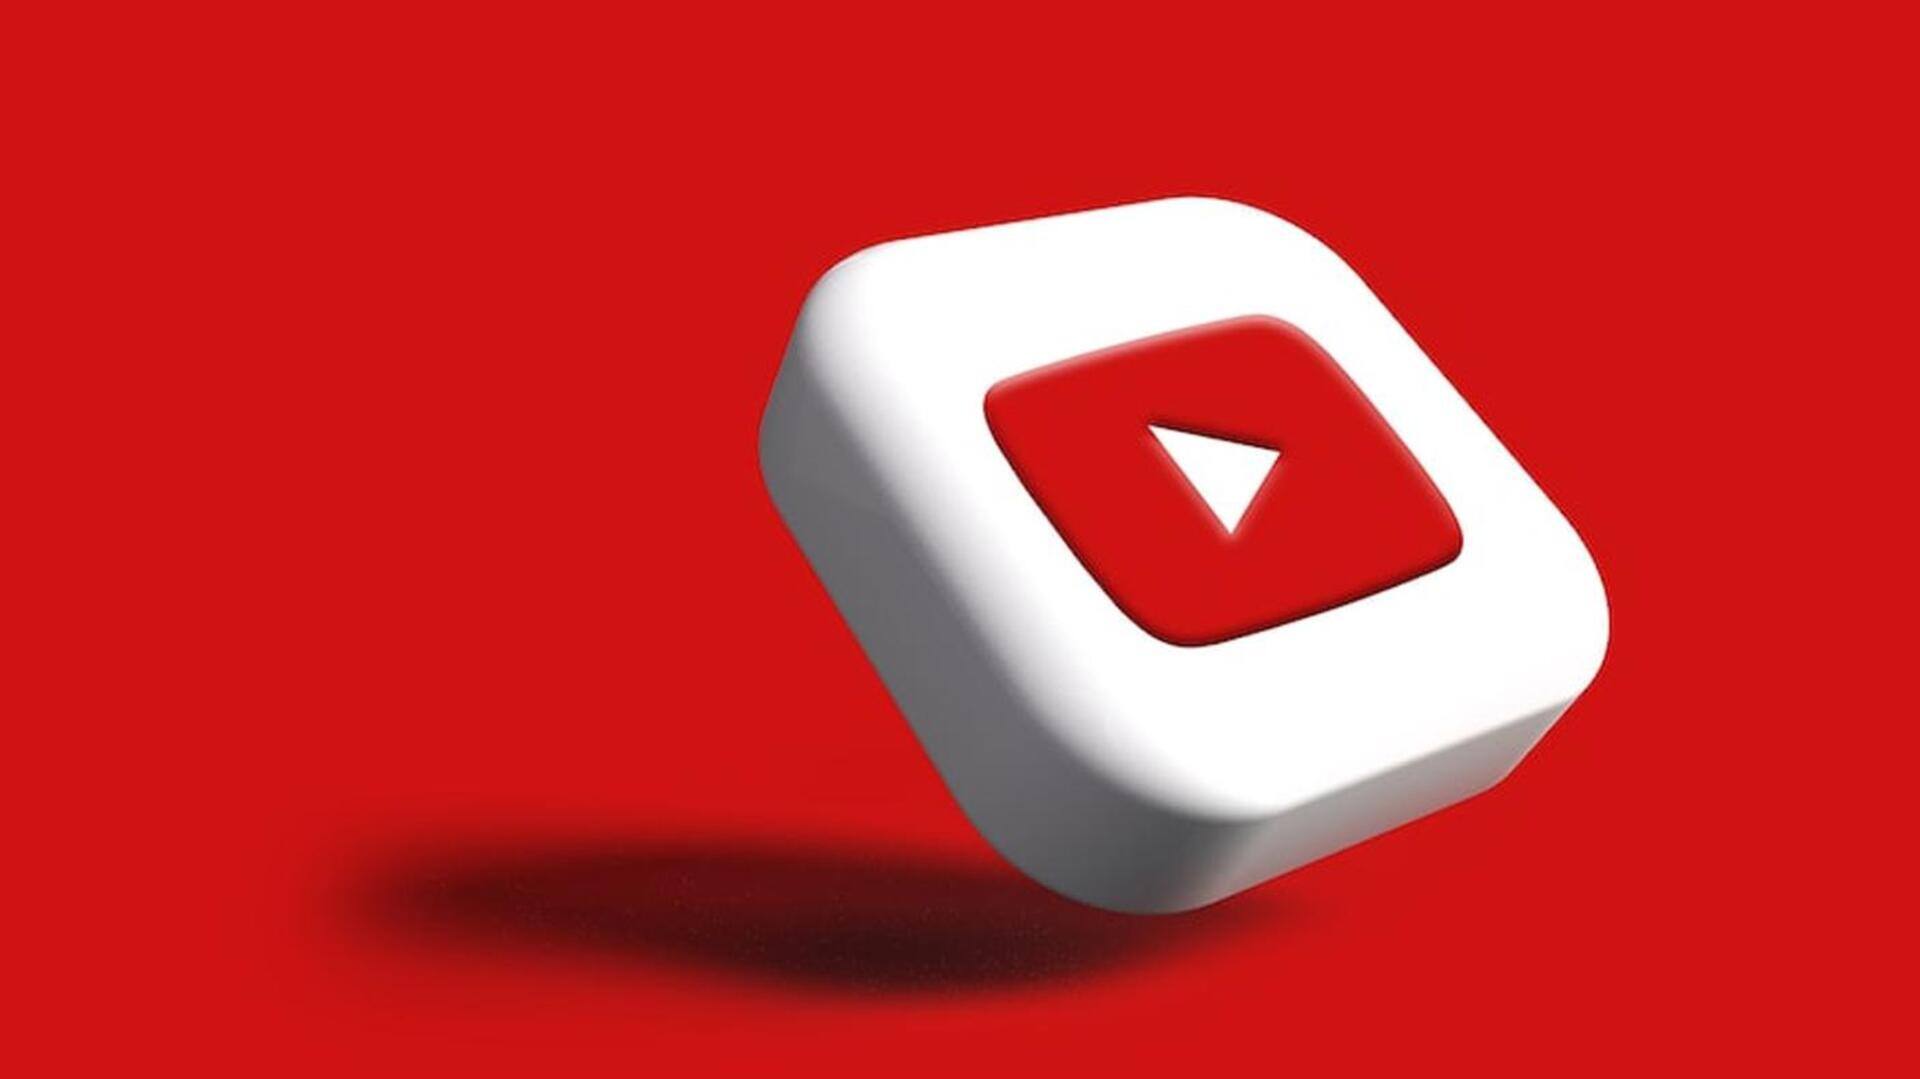 यूट्यूब 25 अक्टूबर को बंद करेगी अपना प्रीमियम लाइट सब्सक्रिप्शन प्लान